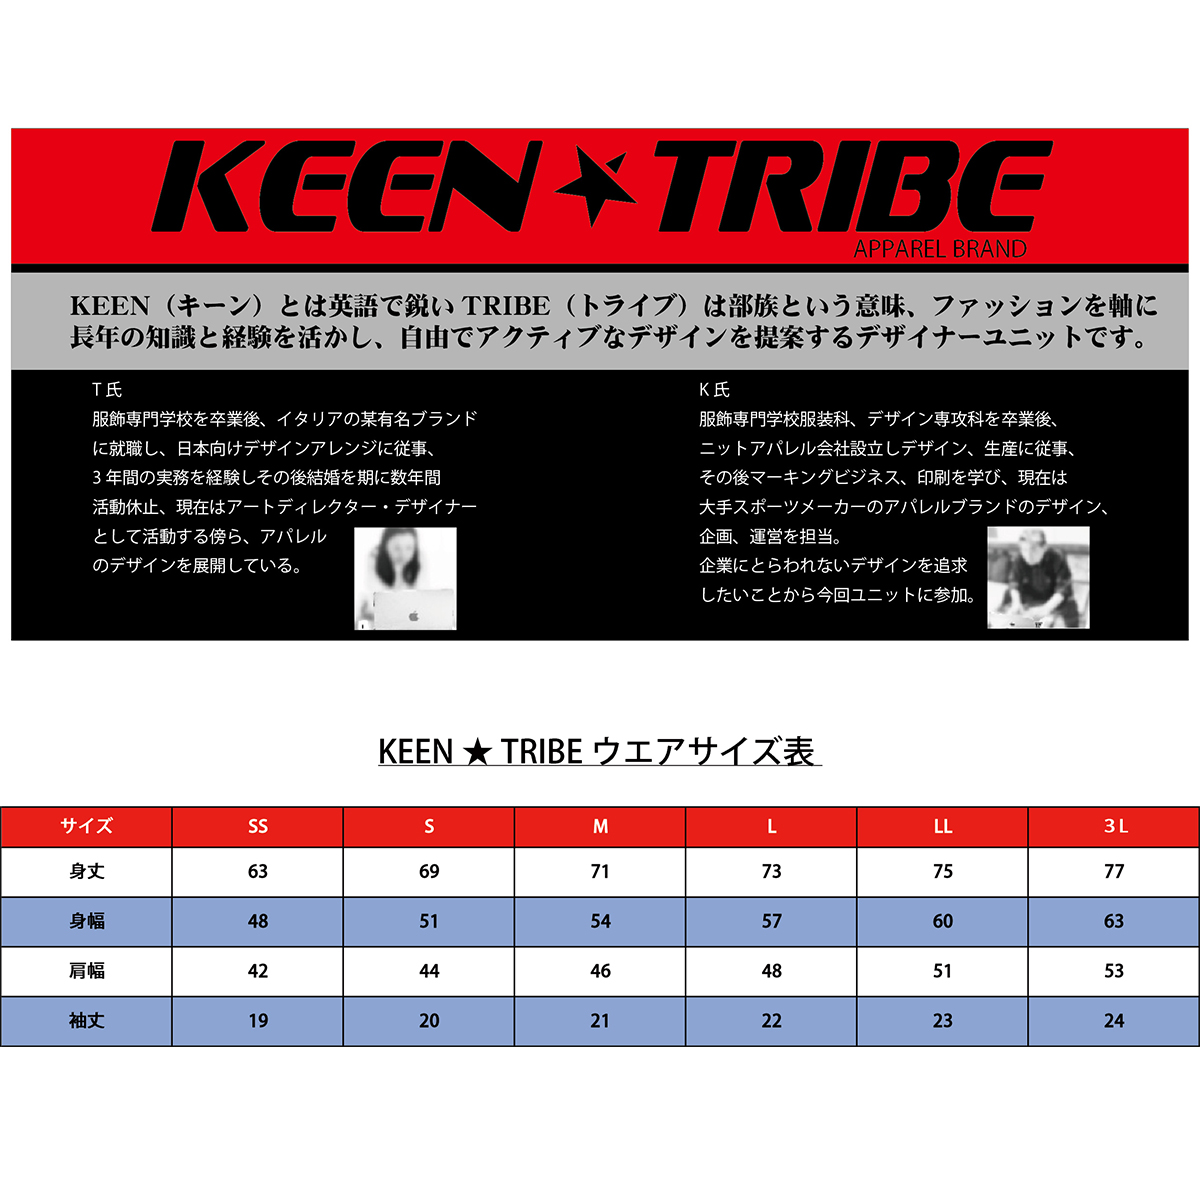 KEEN ★ TRIBE　KT-44(受注生産)【特別価格】